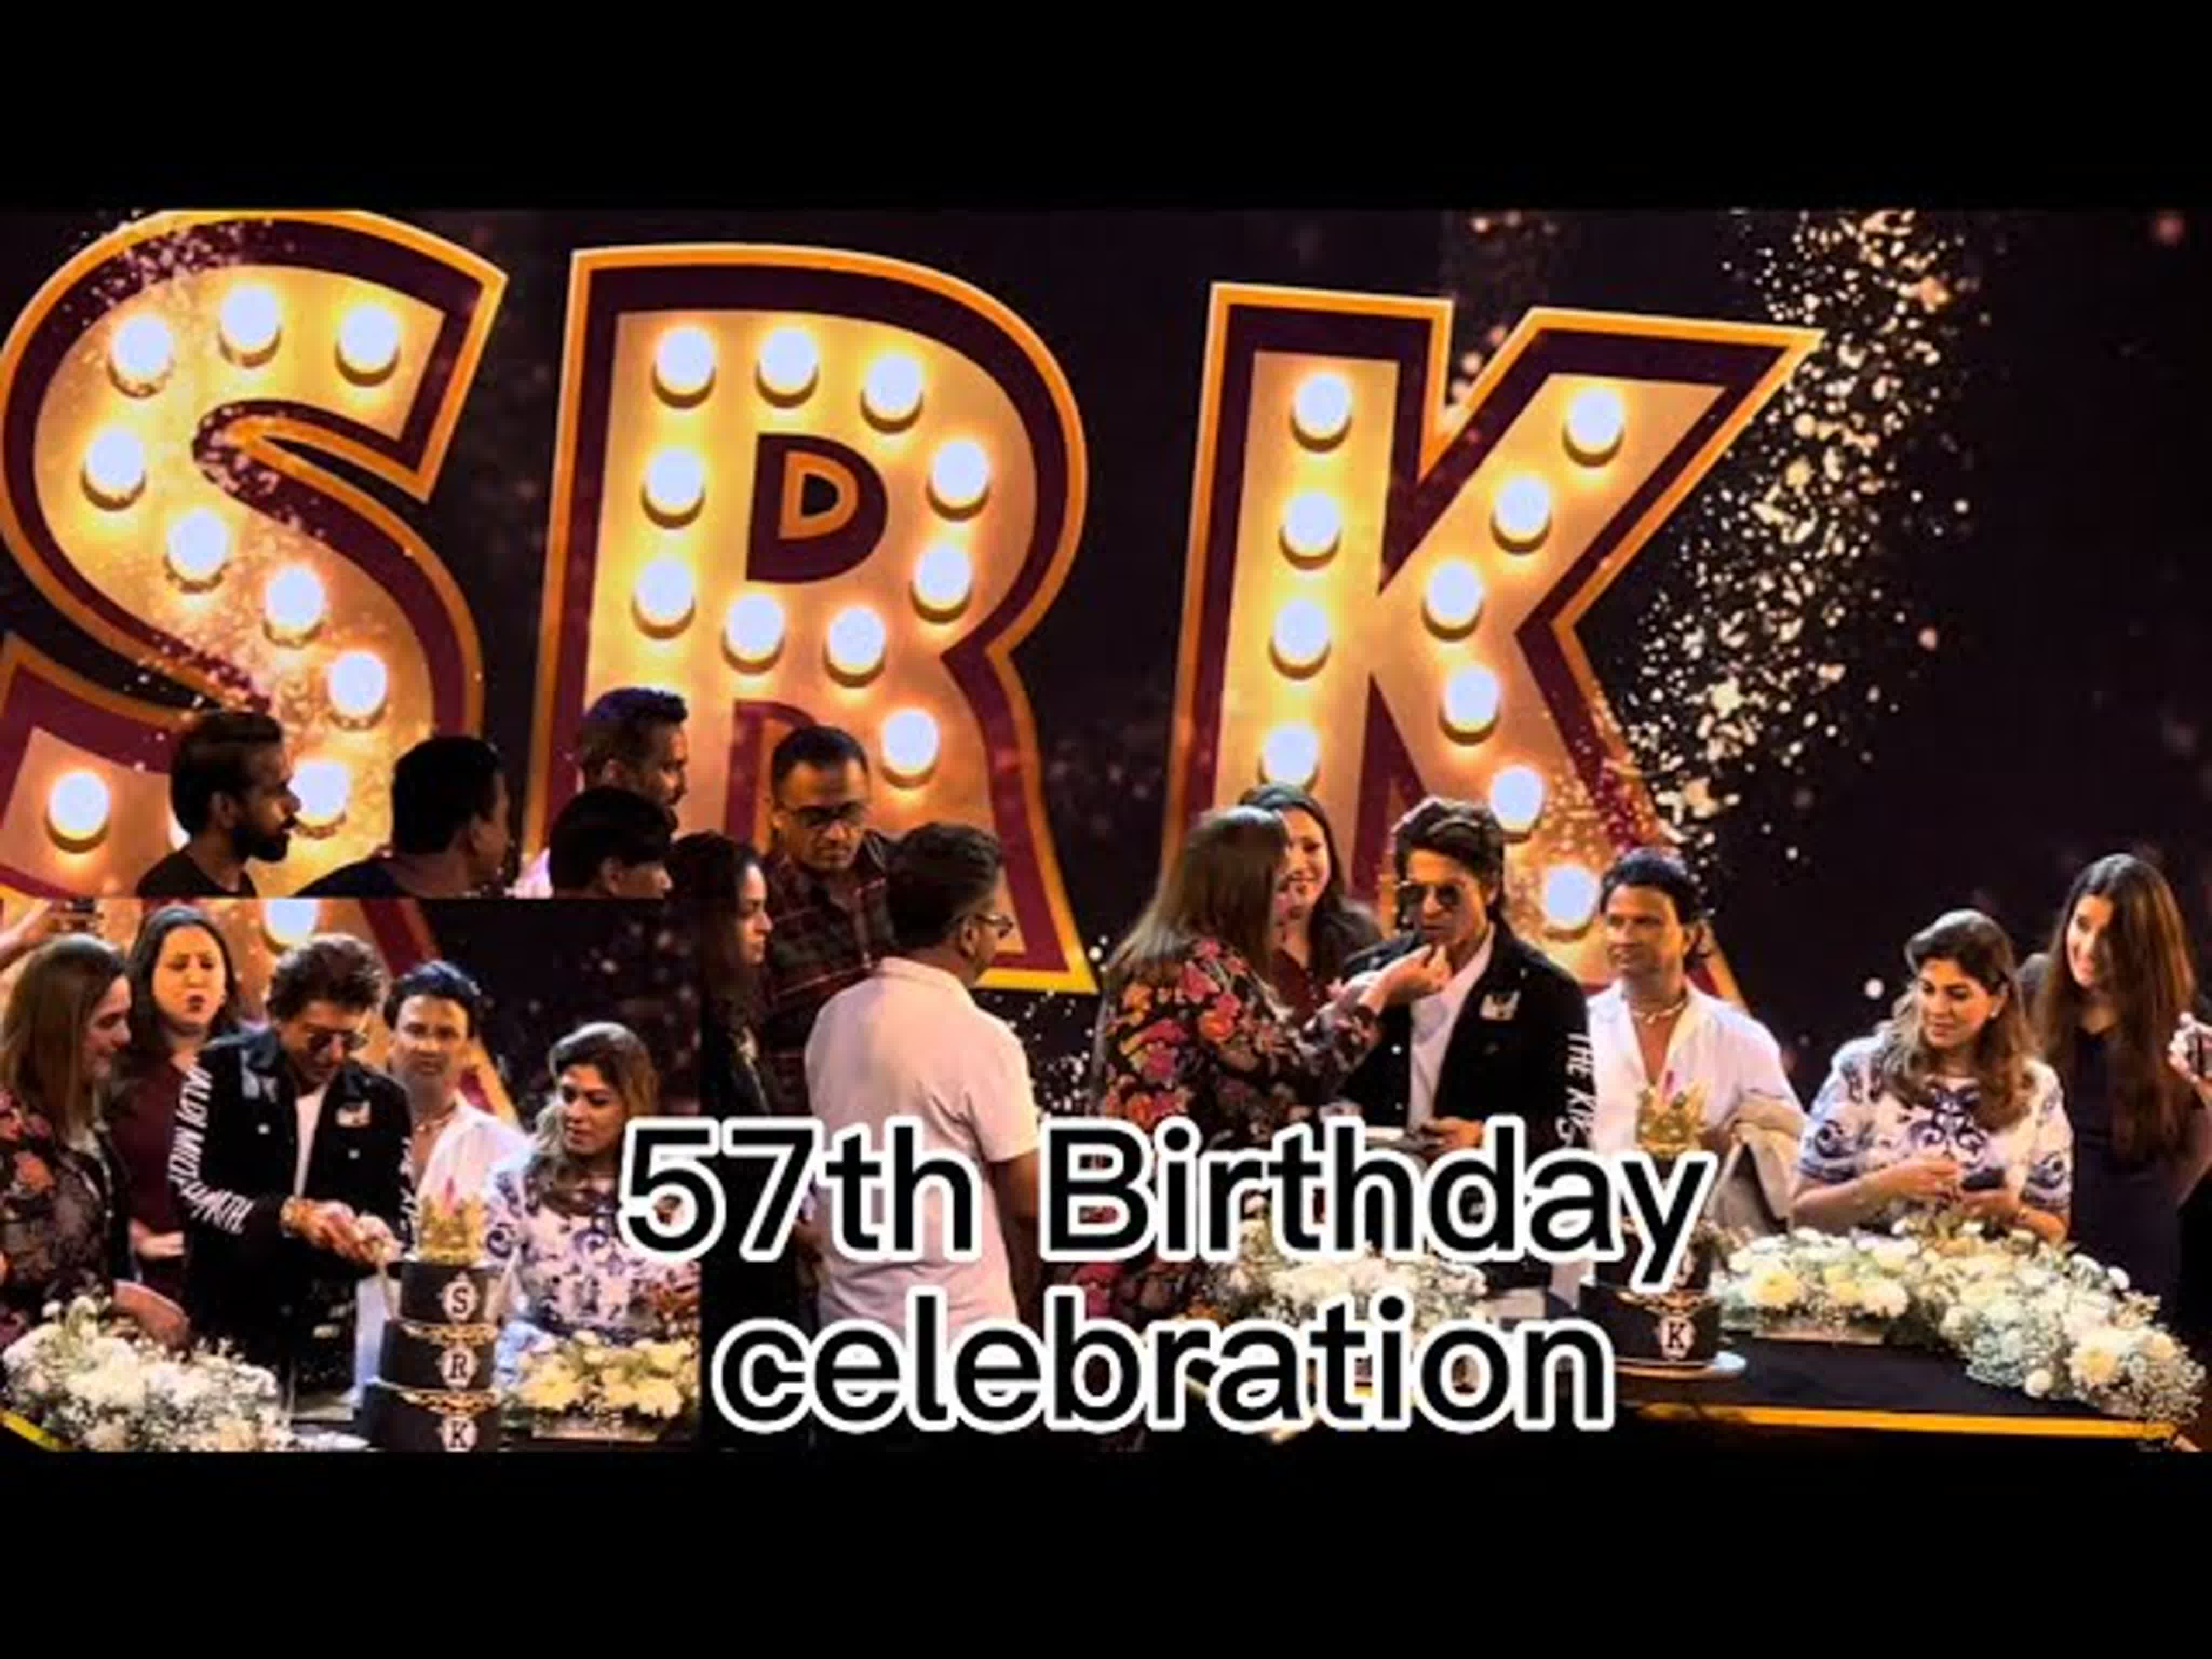 Shah rukh khan 57th birthday celebration in mumbai watch online photo